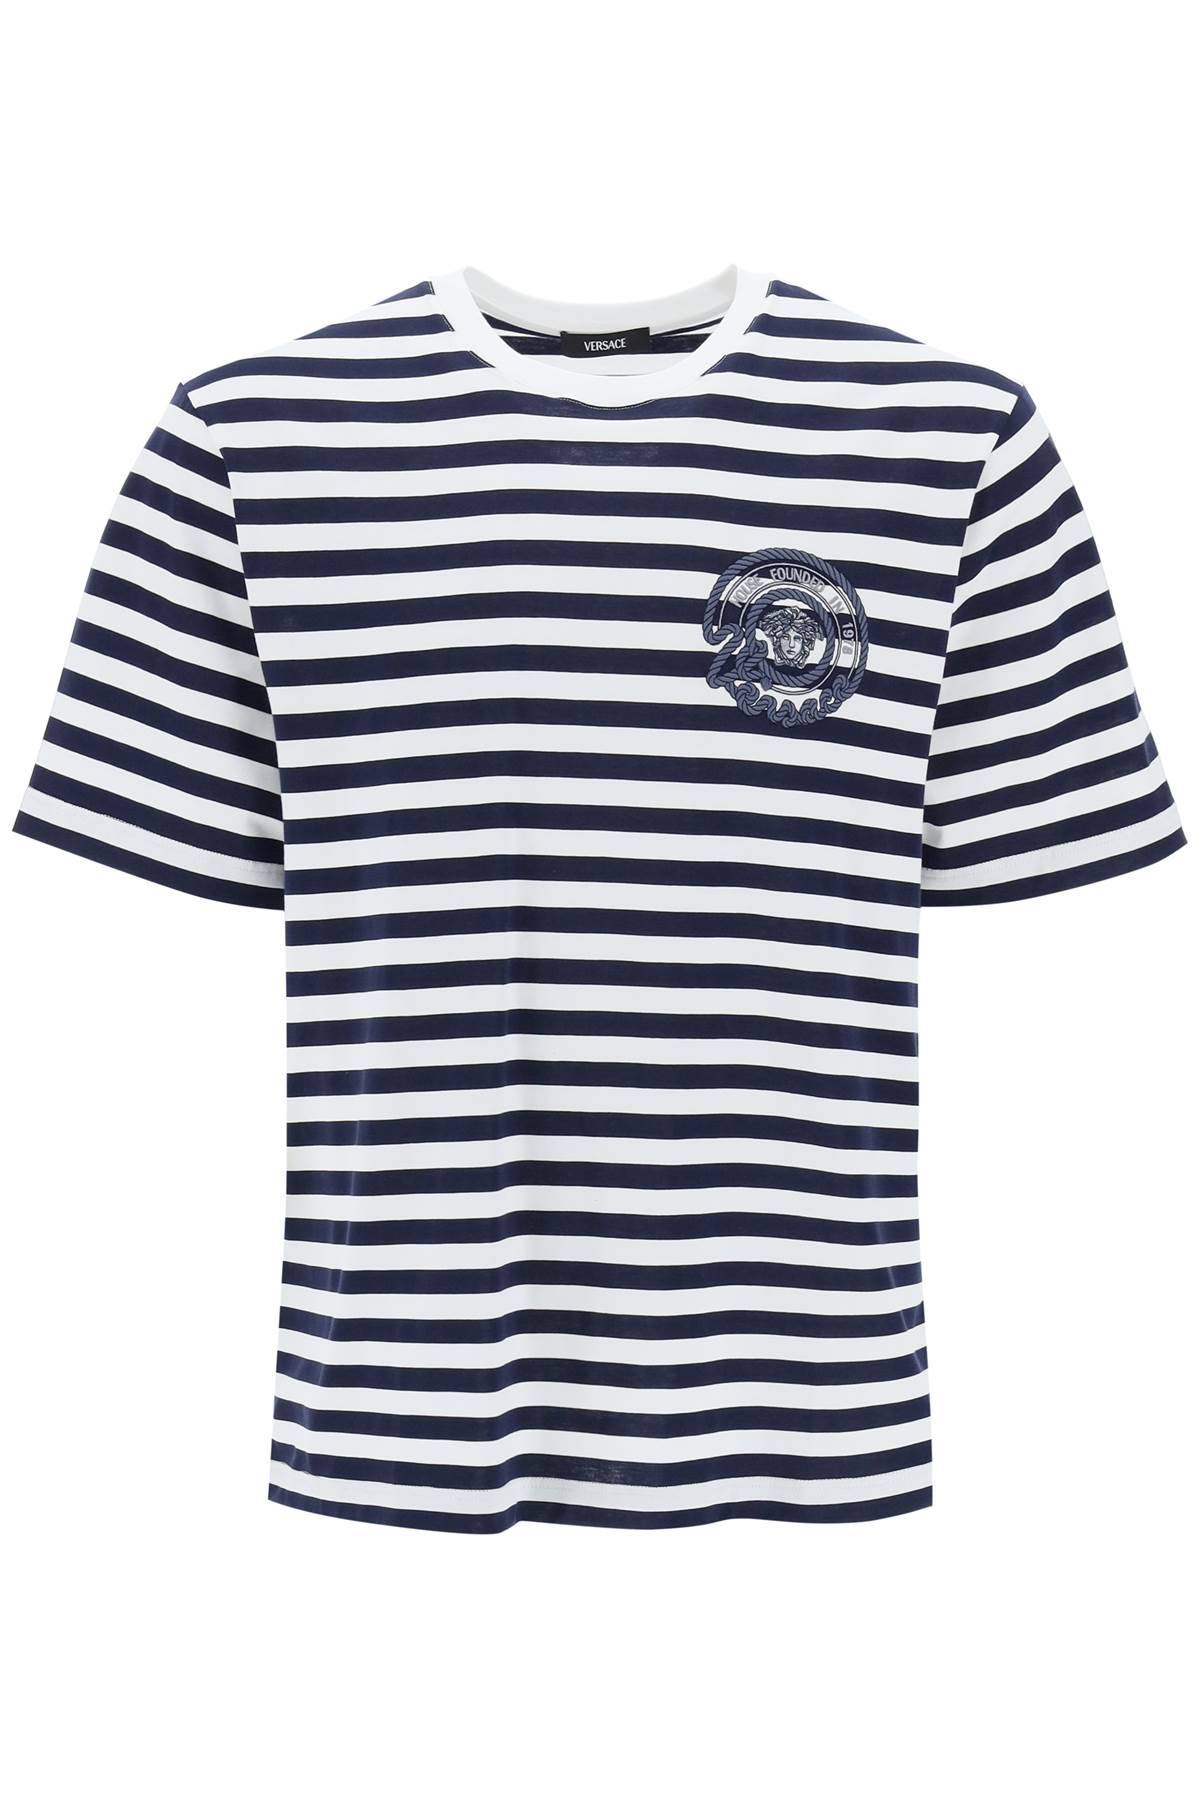 Versace VERSACE nautical stripe t-shirt